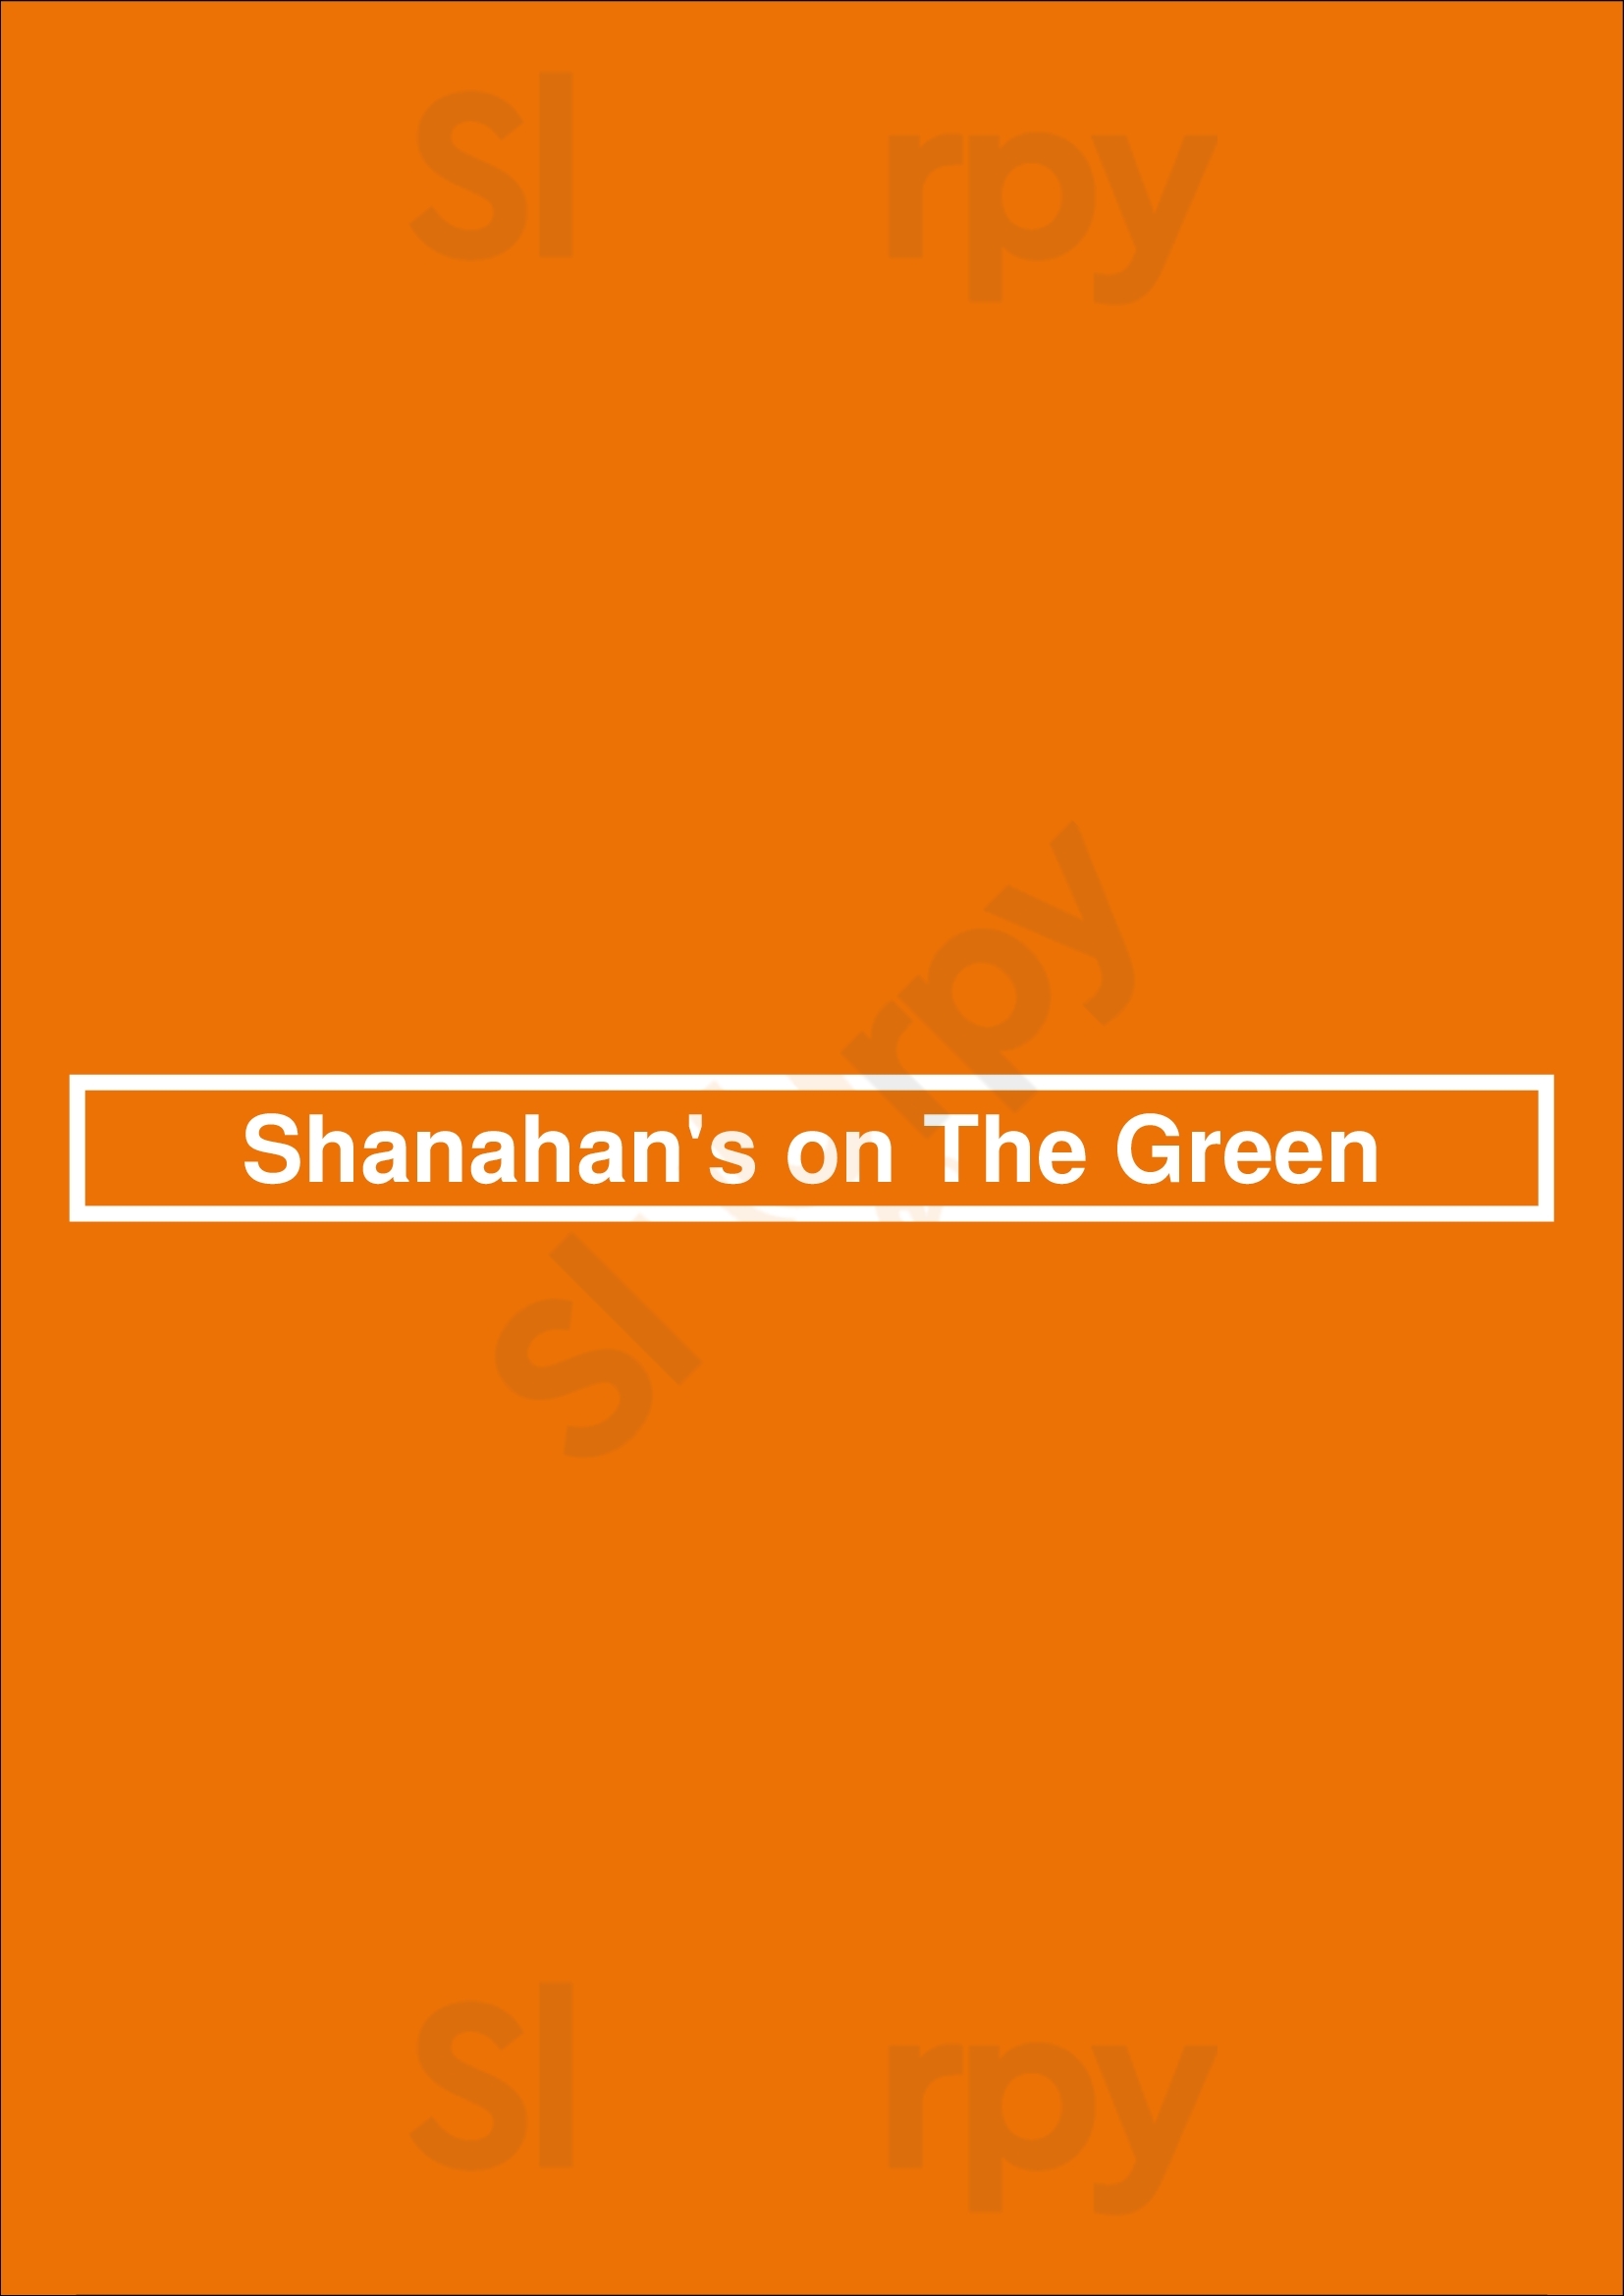 Shanahan's On The Green Dublin Menu - 1